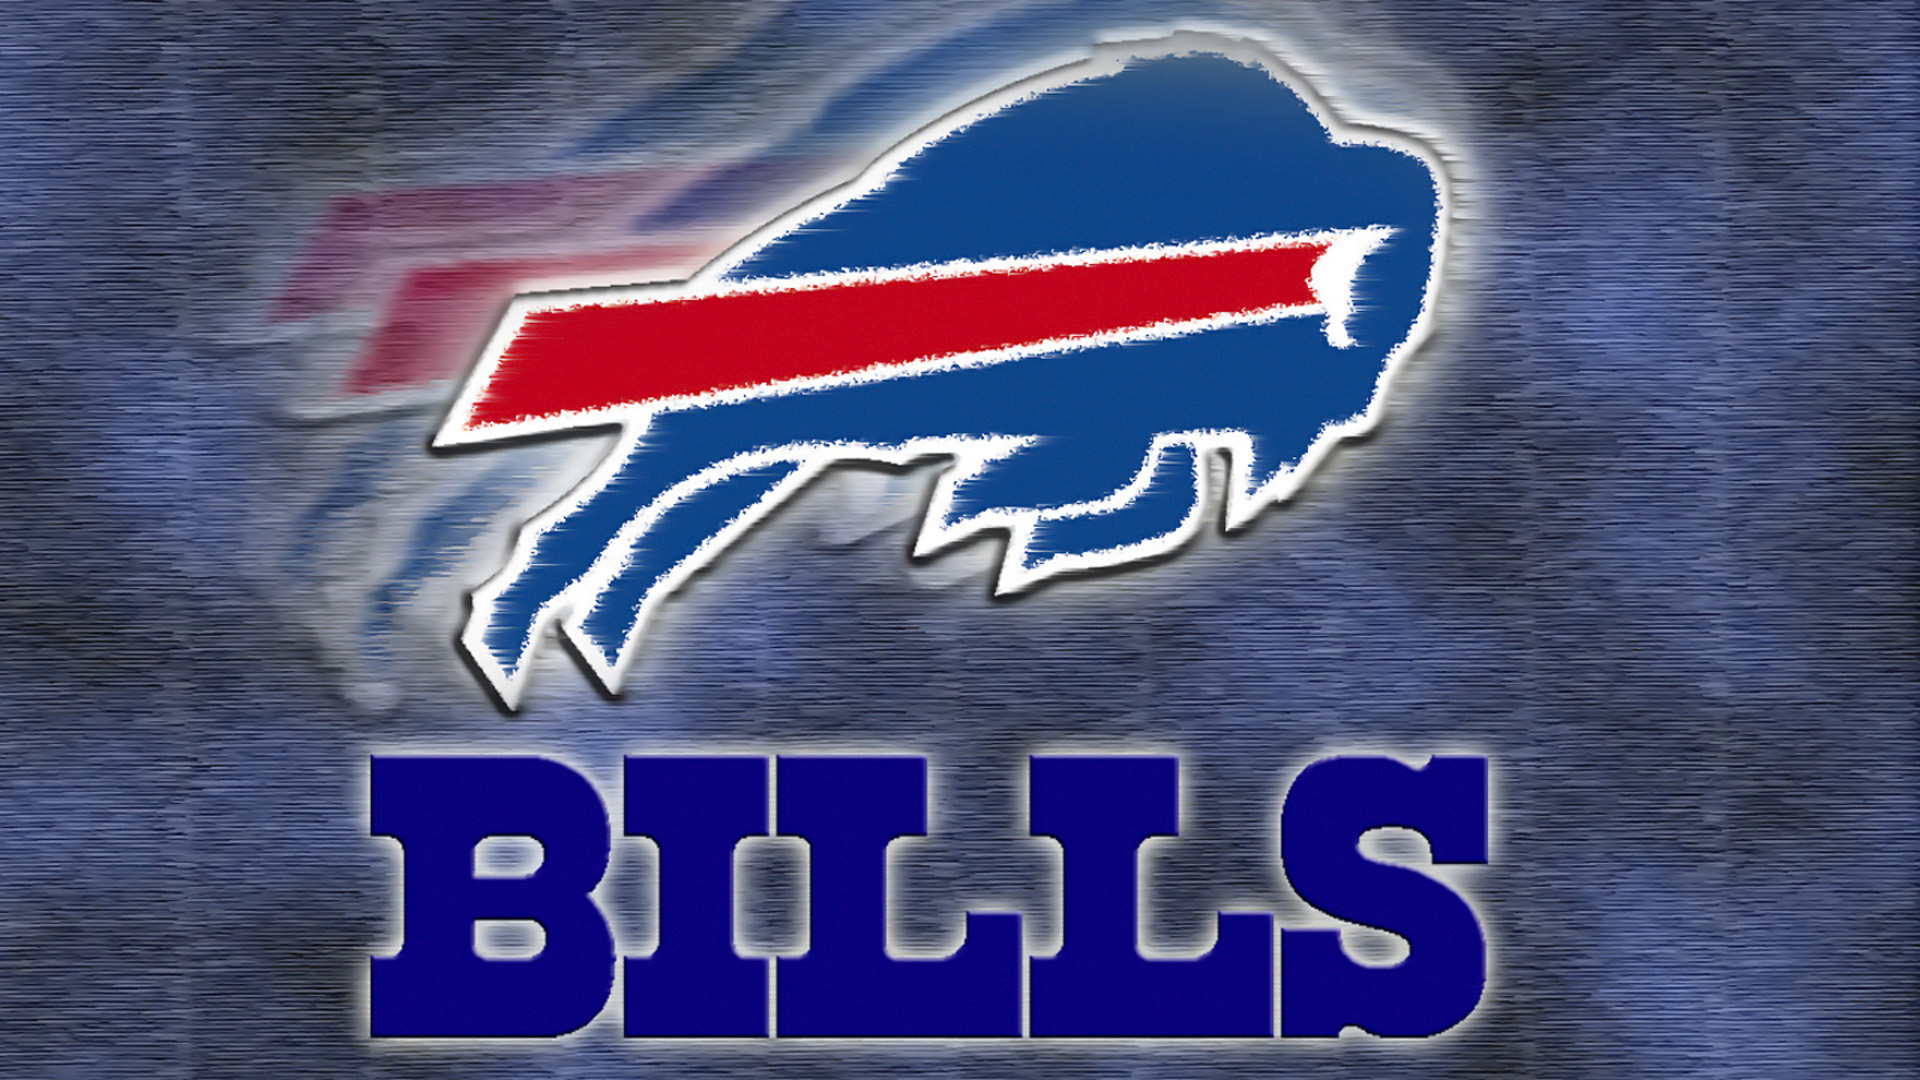 Wallpaper wallpaper sport logo NFL Buffalo Bills images for desktop  section спорт  download